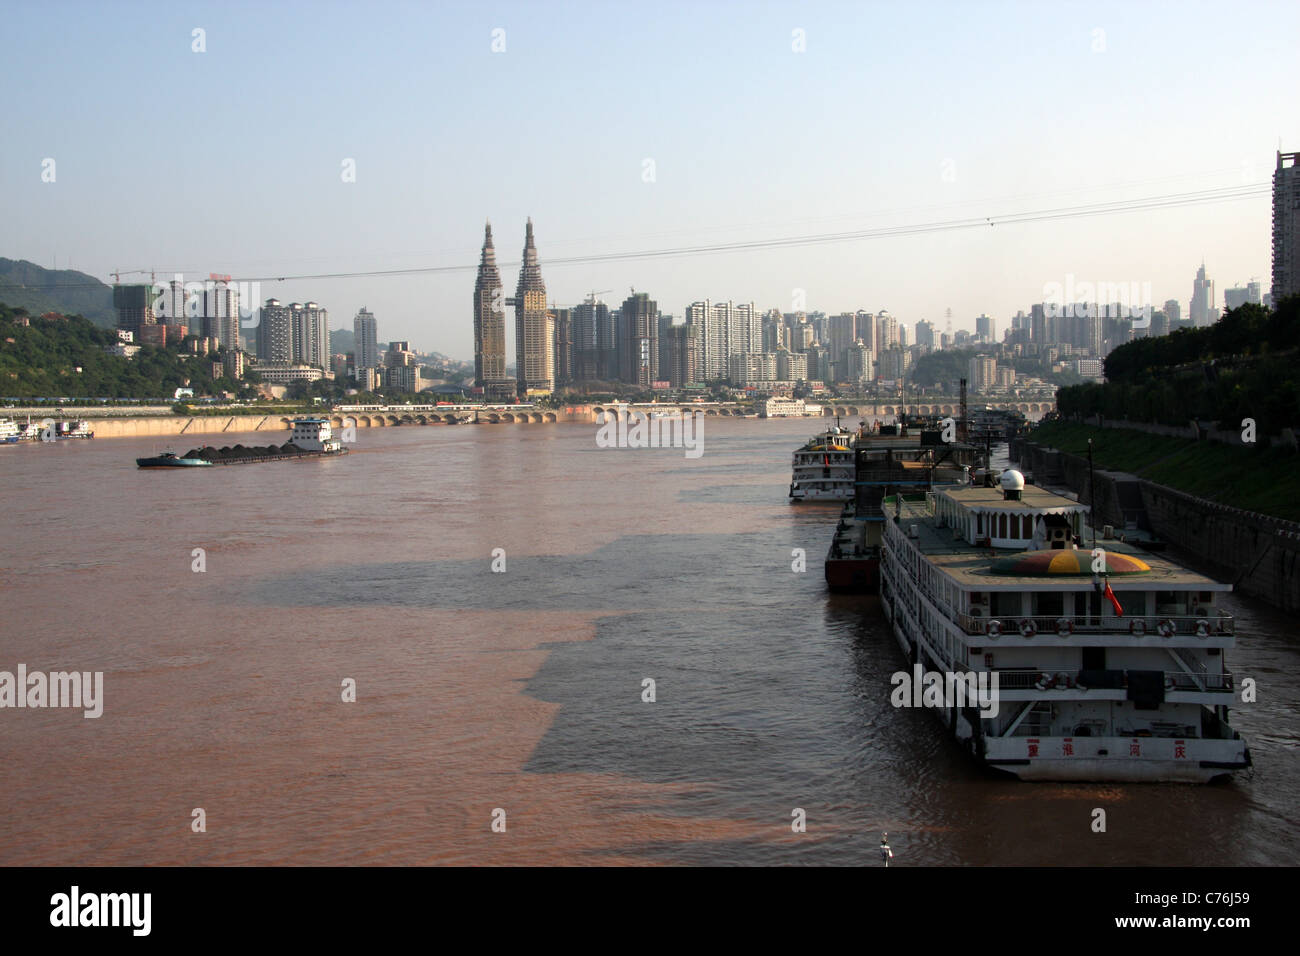 Evening view (looking upstream) of river traffic and boats moored along the Yangtze River at Chongqing, China Stock Photo